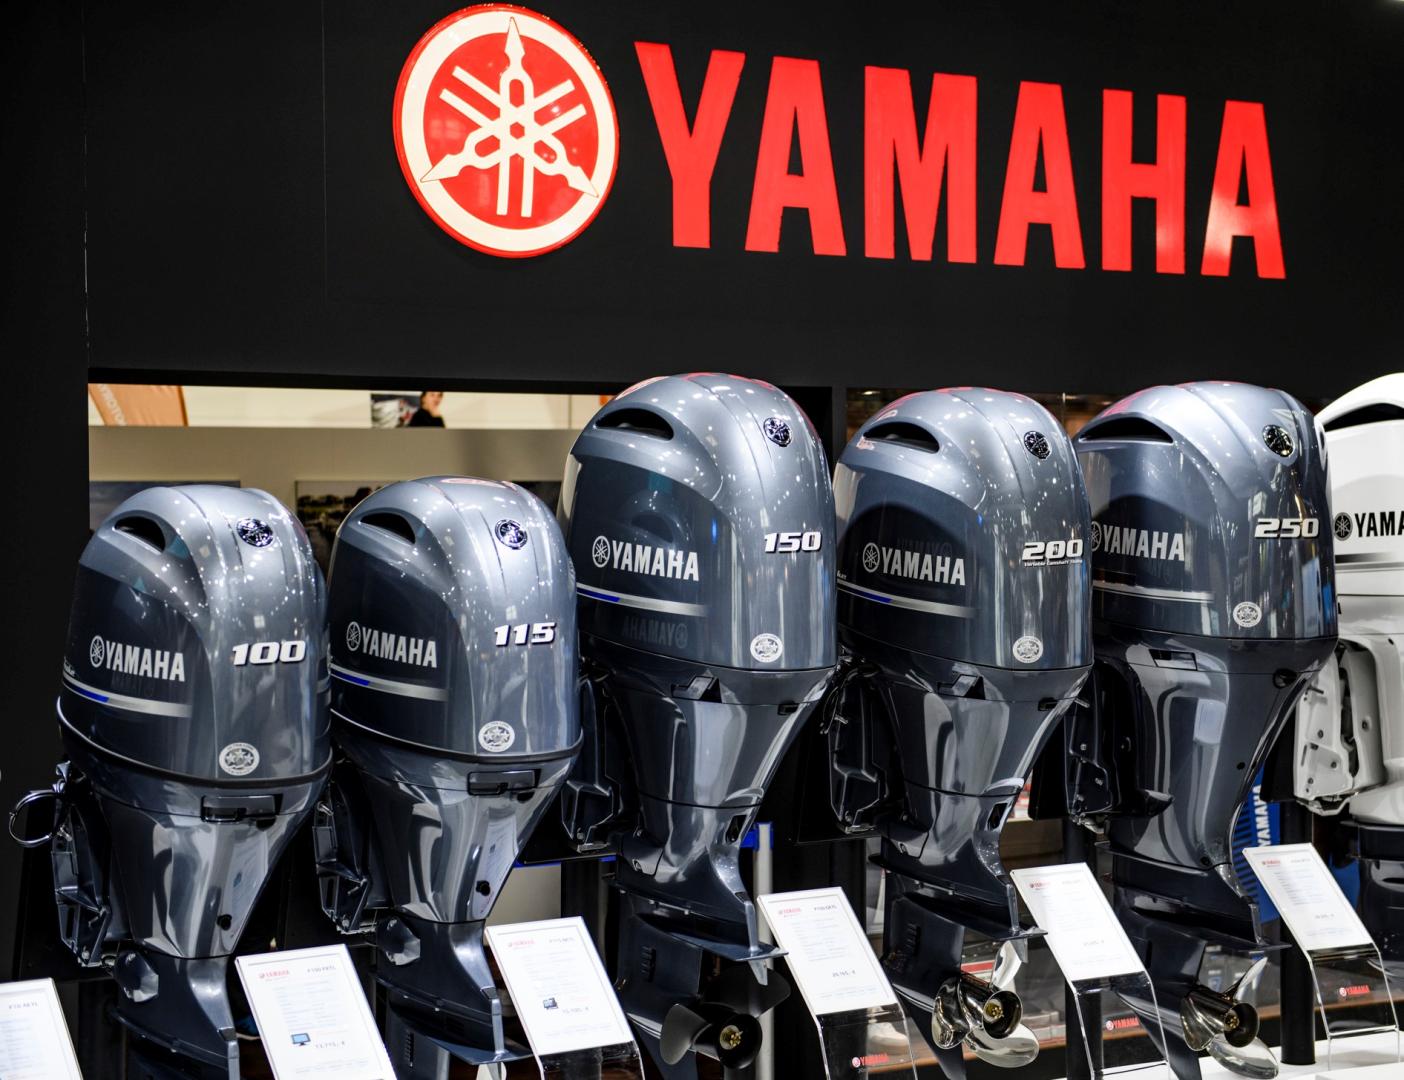 La gamma Yamaha presente al NauticSud